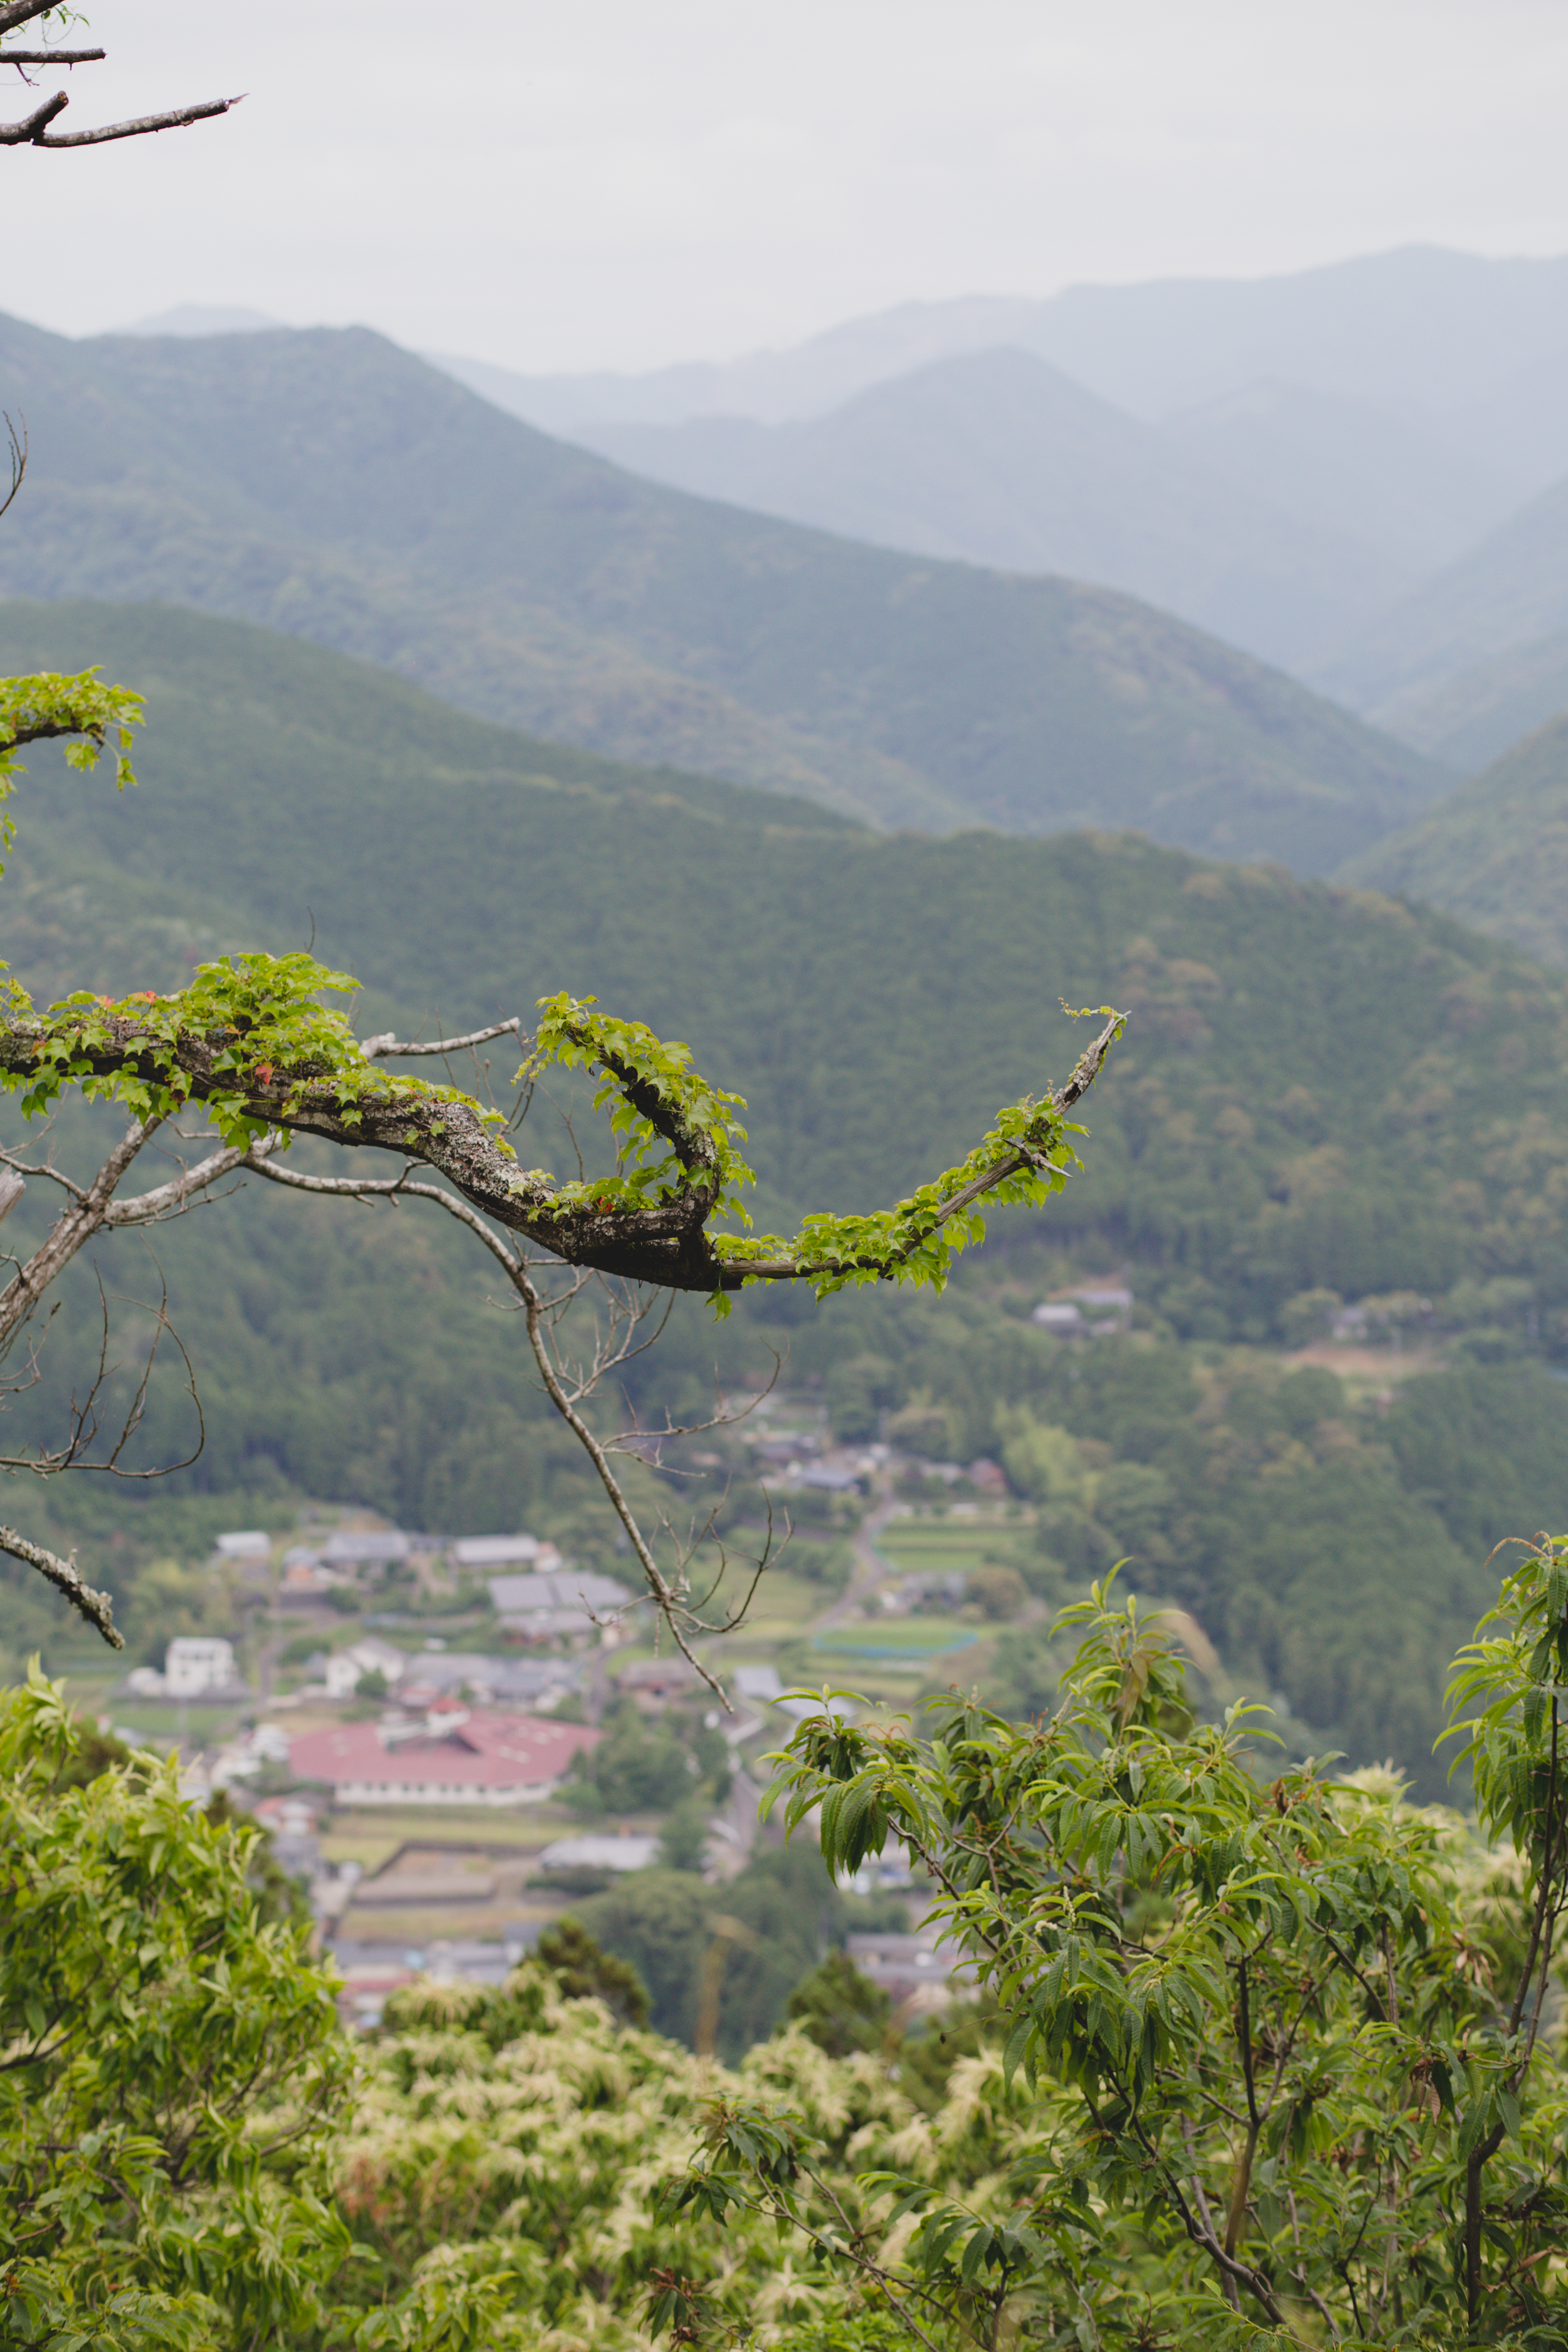  The Kumano Kodo trail passes through small mountain villages along the way. 